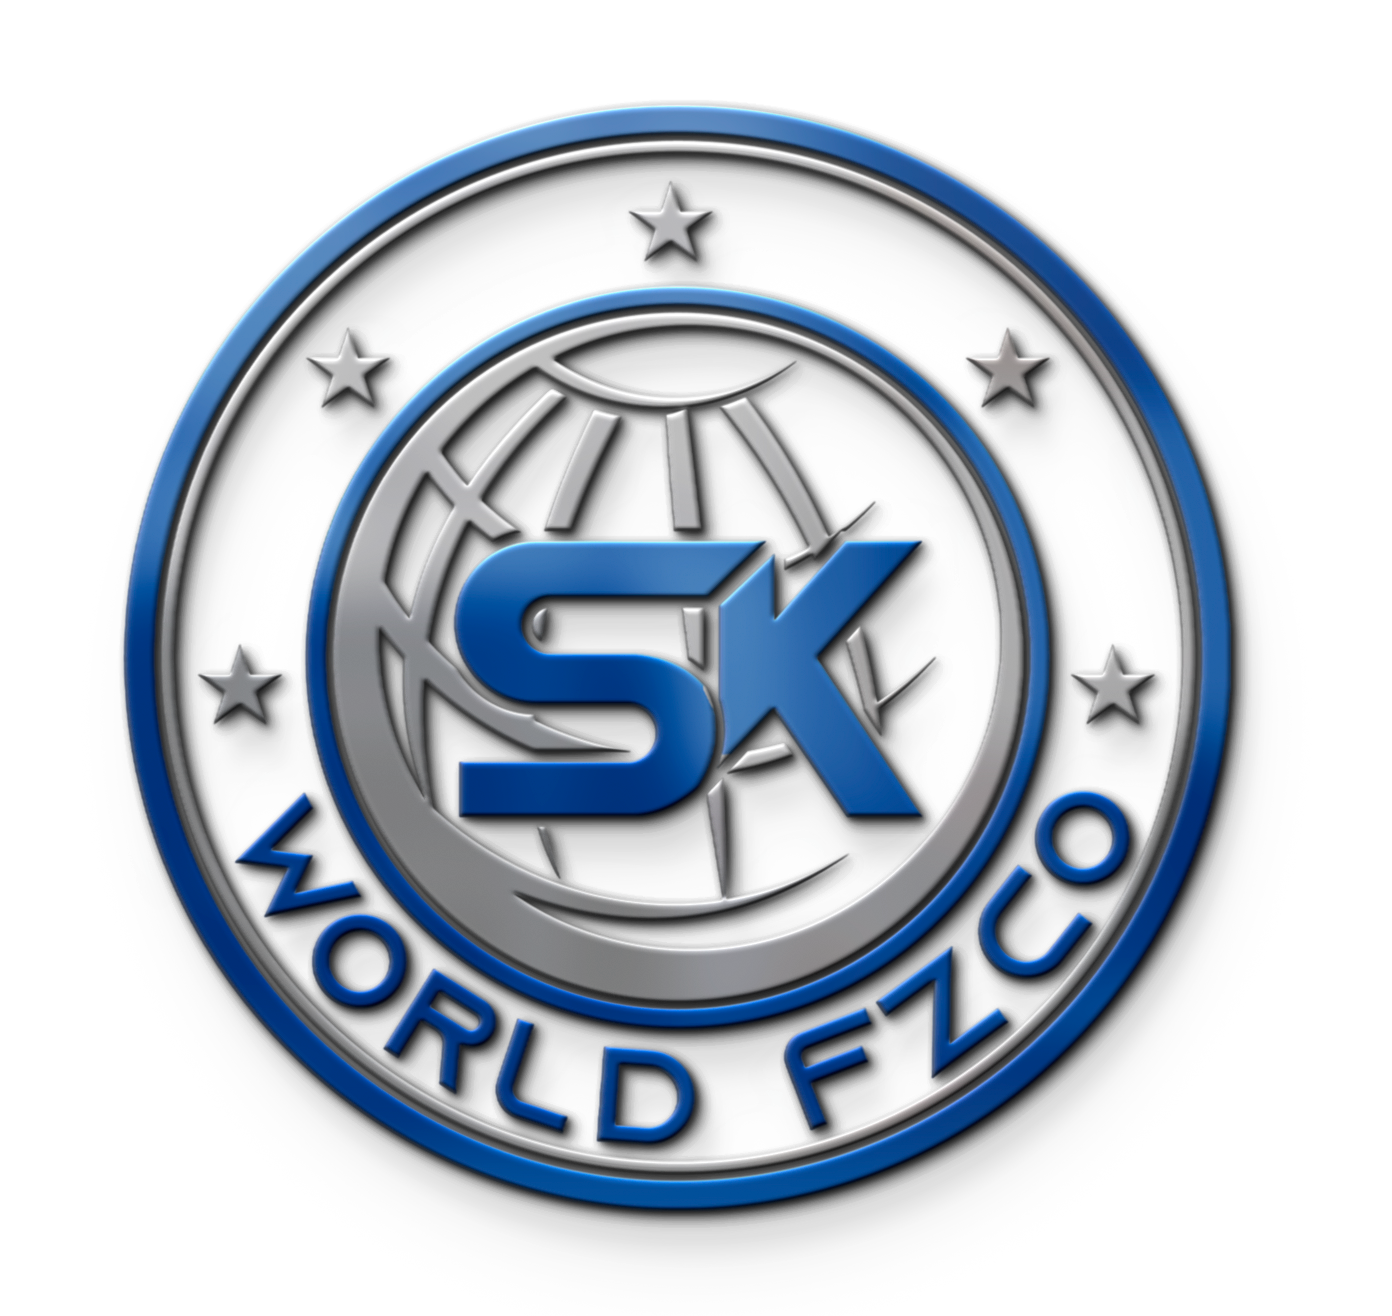 SK World FZCO